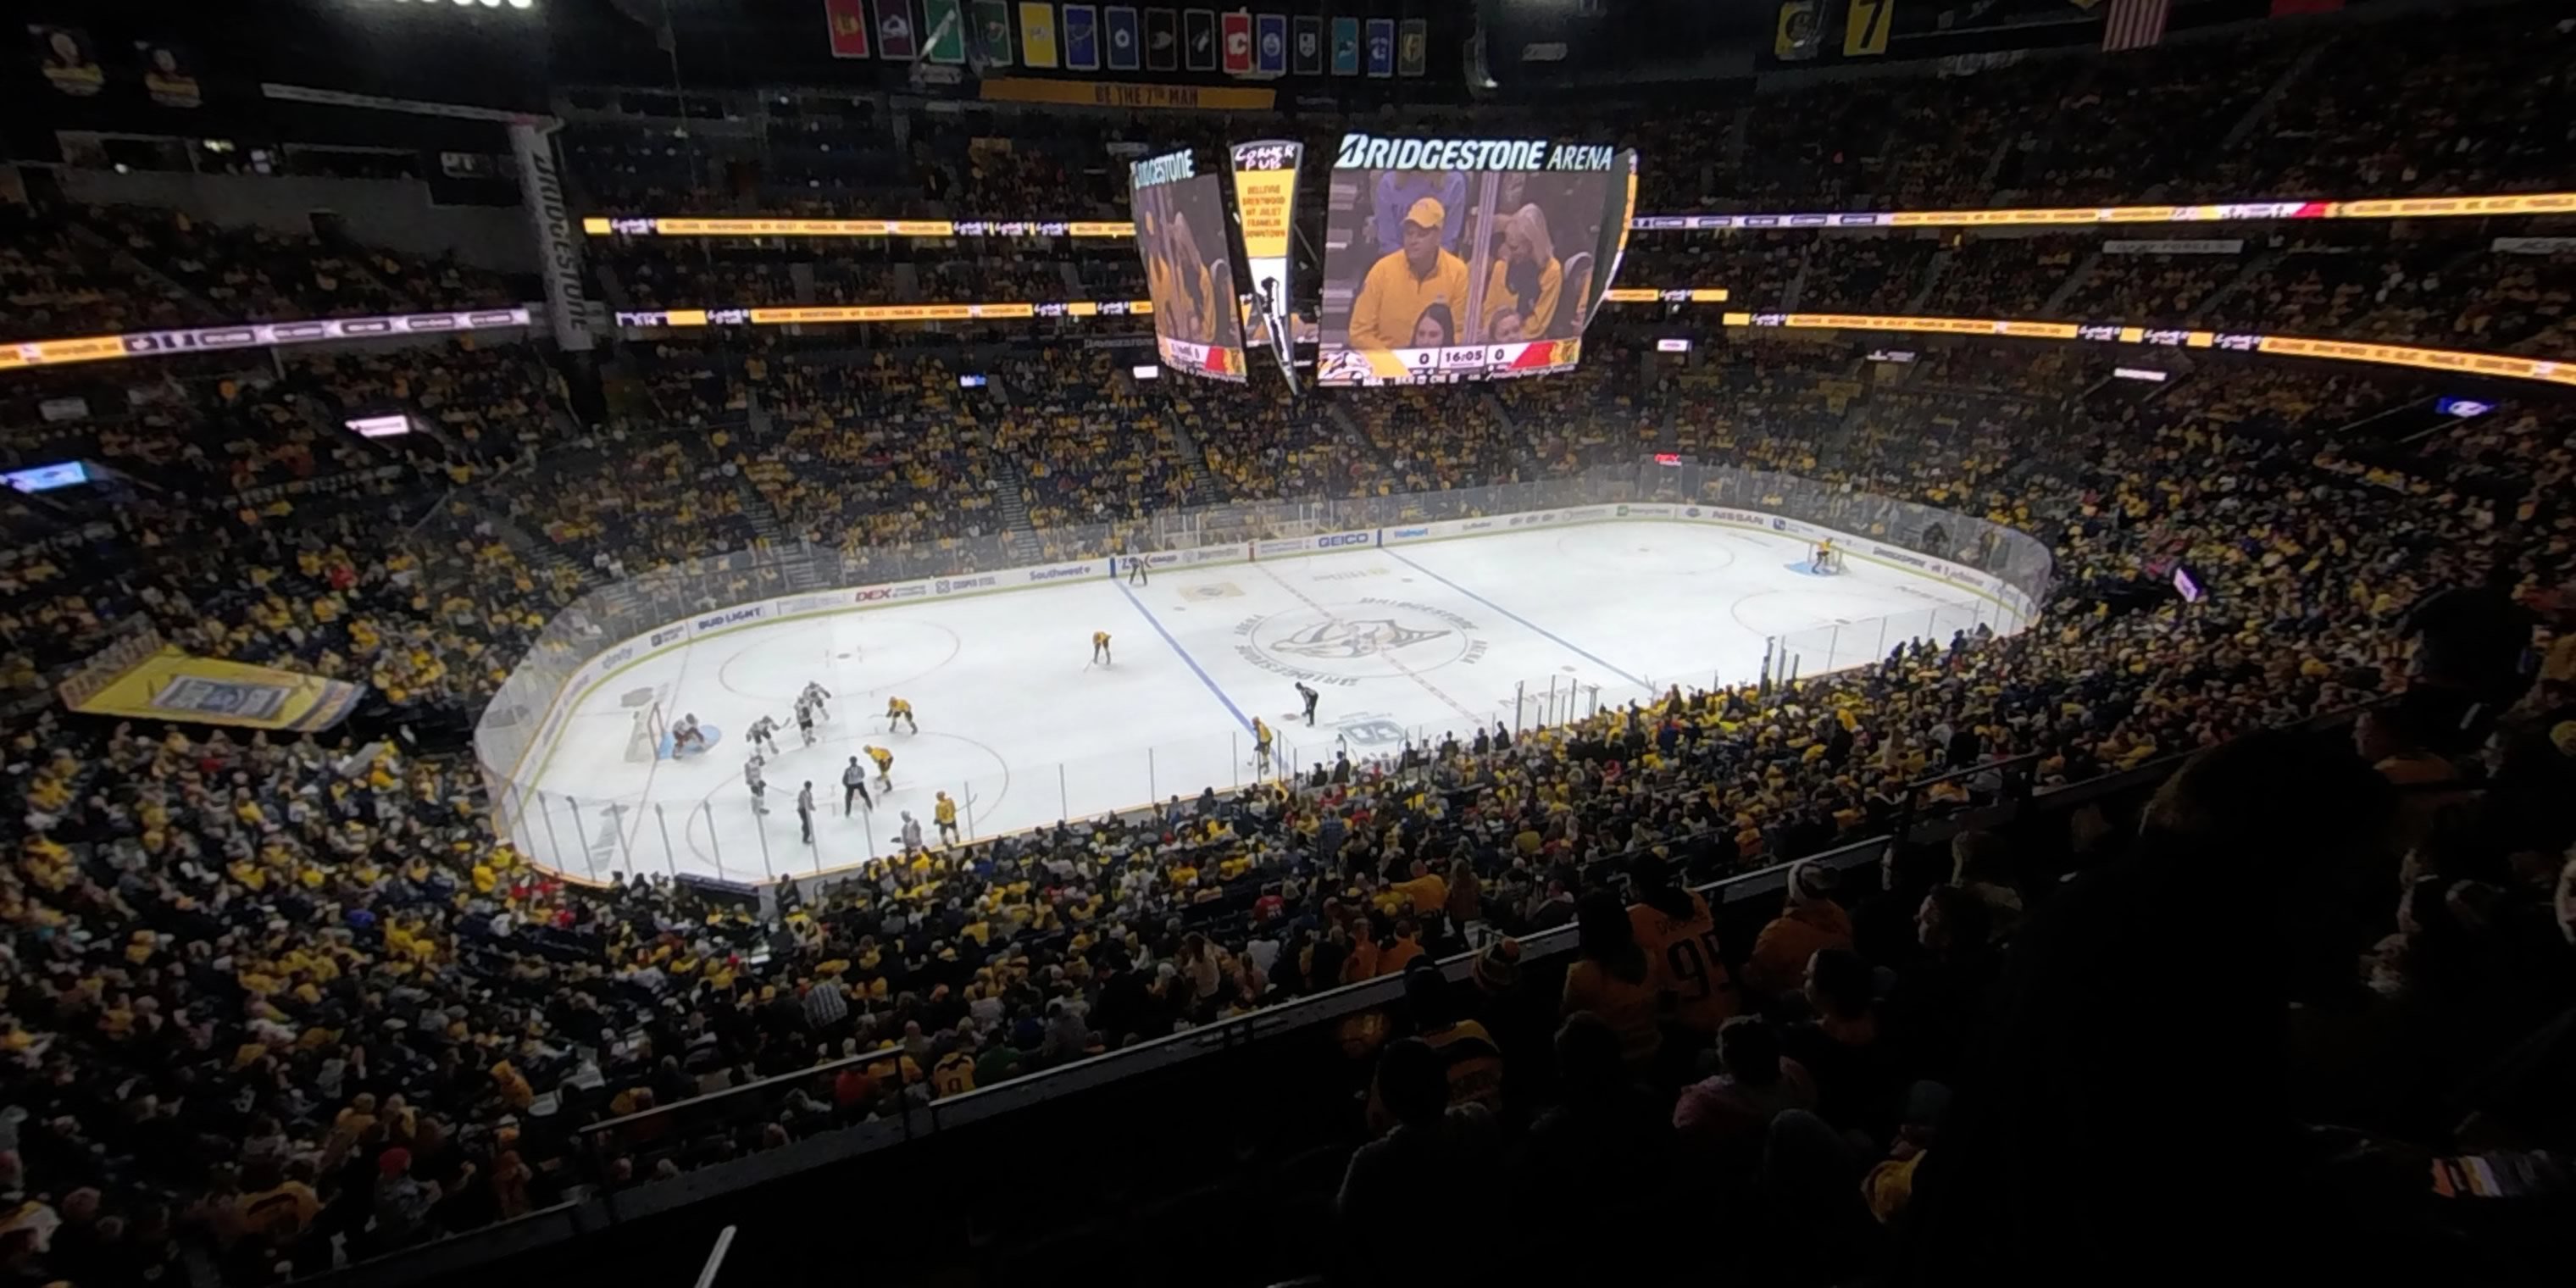 section 213 panoramic seat view  for hockey - bridgestone arena